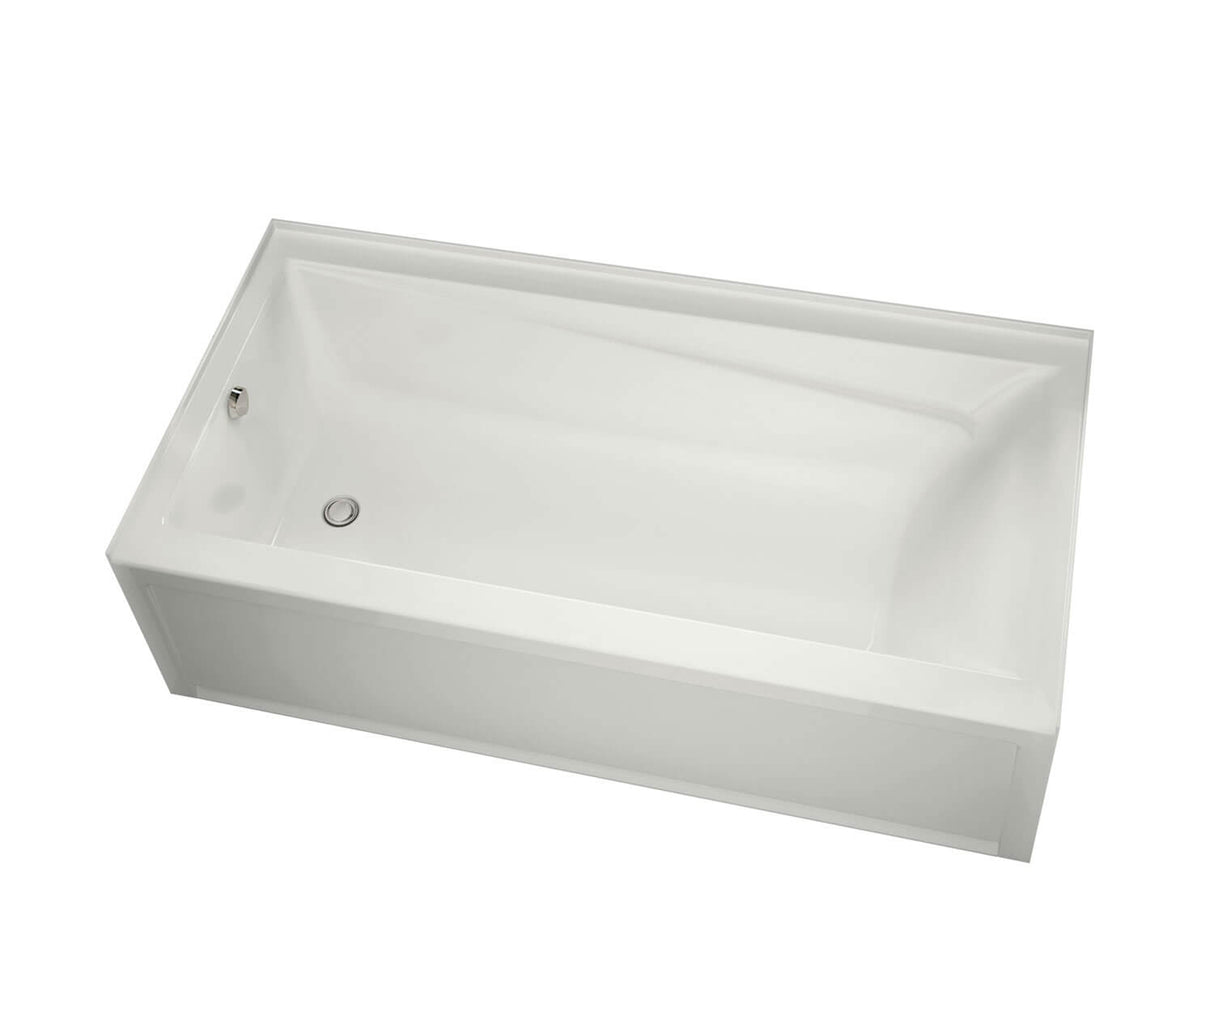 MAAX 105520-000-001-103 Exhibit 6032 IFS Acrylic Alcove Right-Hand Drain Bathtub in White